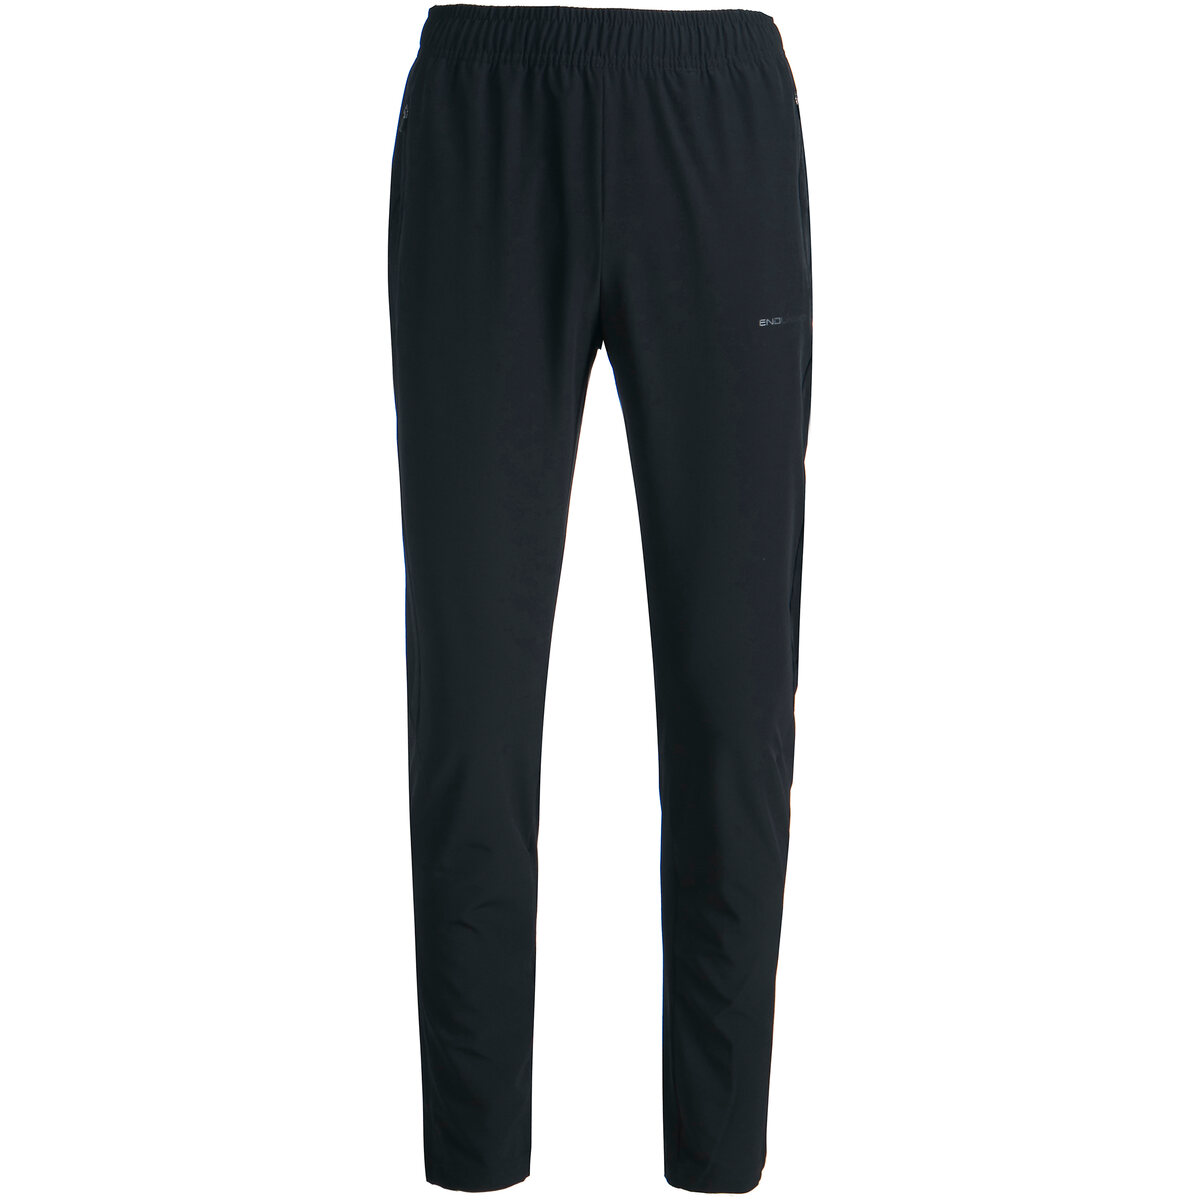 Joggers & Sweatpants -  endurance Medear W Pants